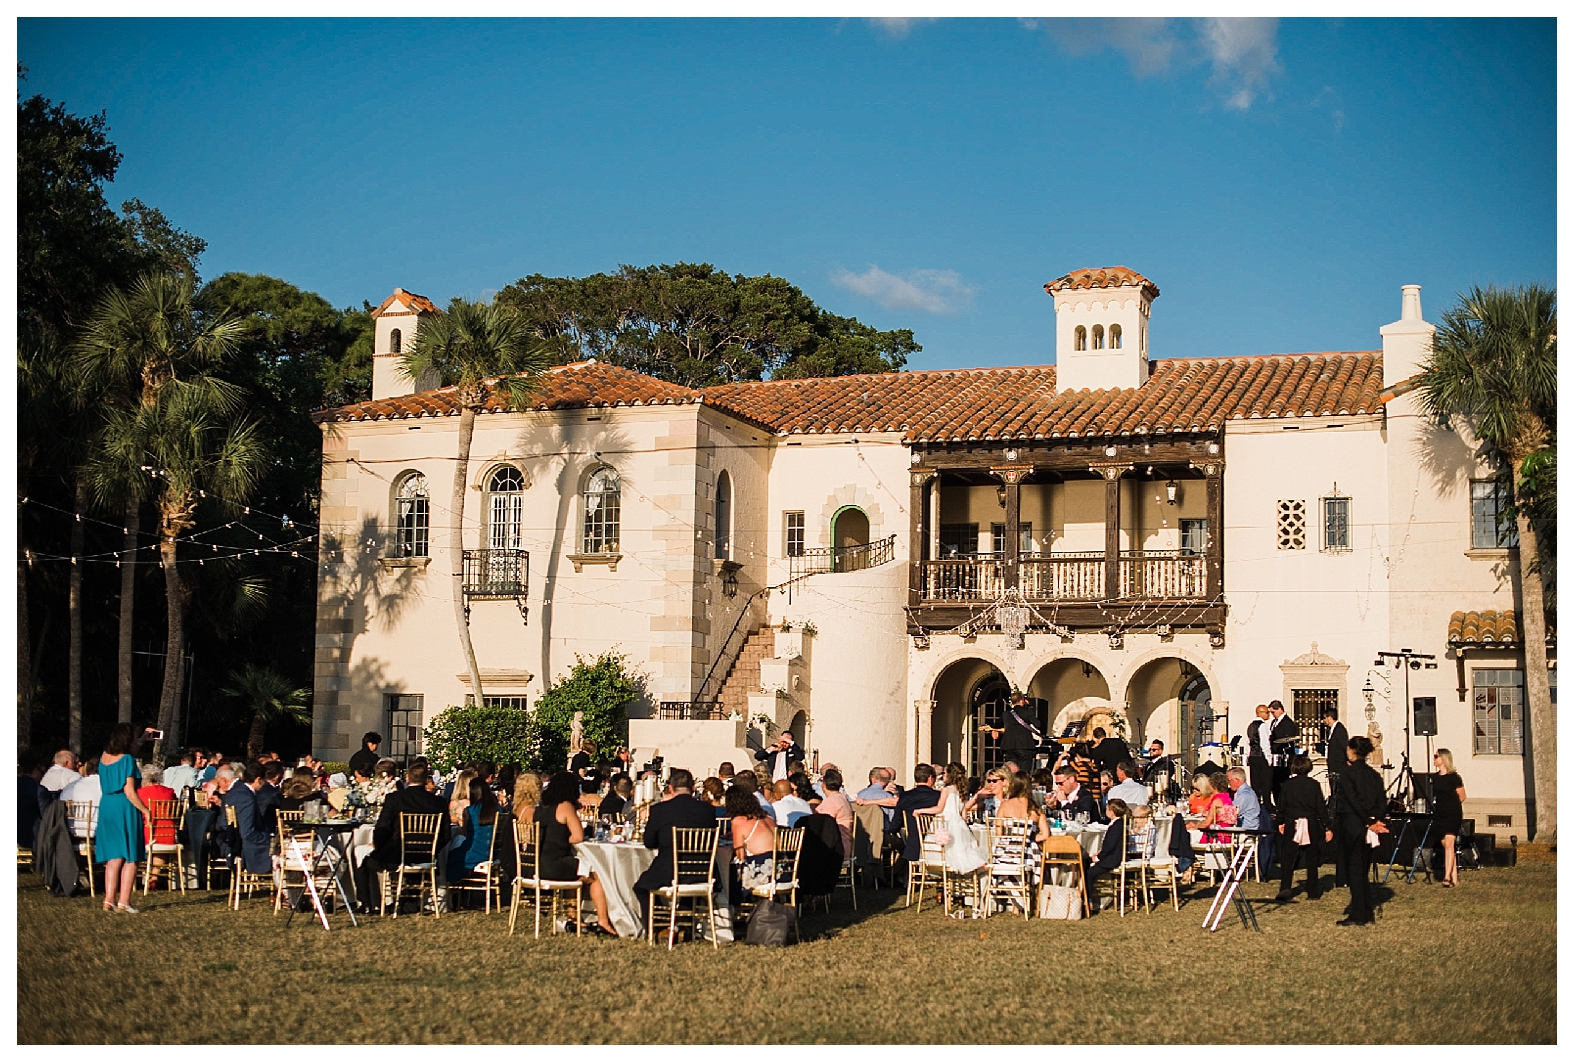 Wedding at Powel Crosley Estate - Sarasota Wedding Photographer